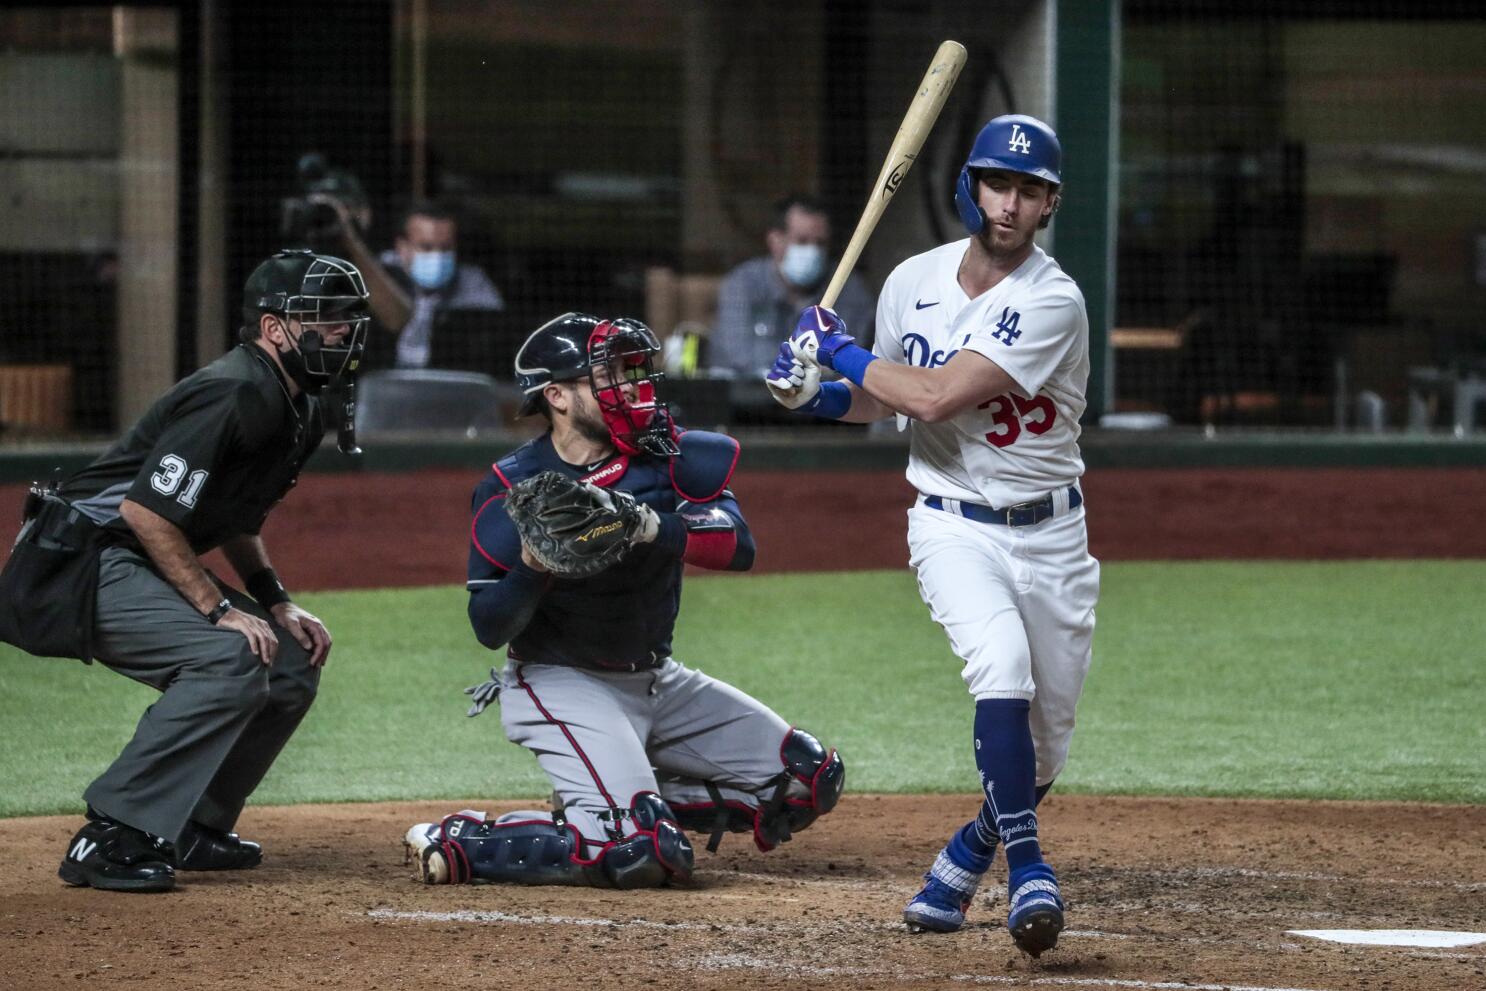 World Series: Dodgers closer Kenley Jansen entering Mariano Rivera turf